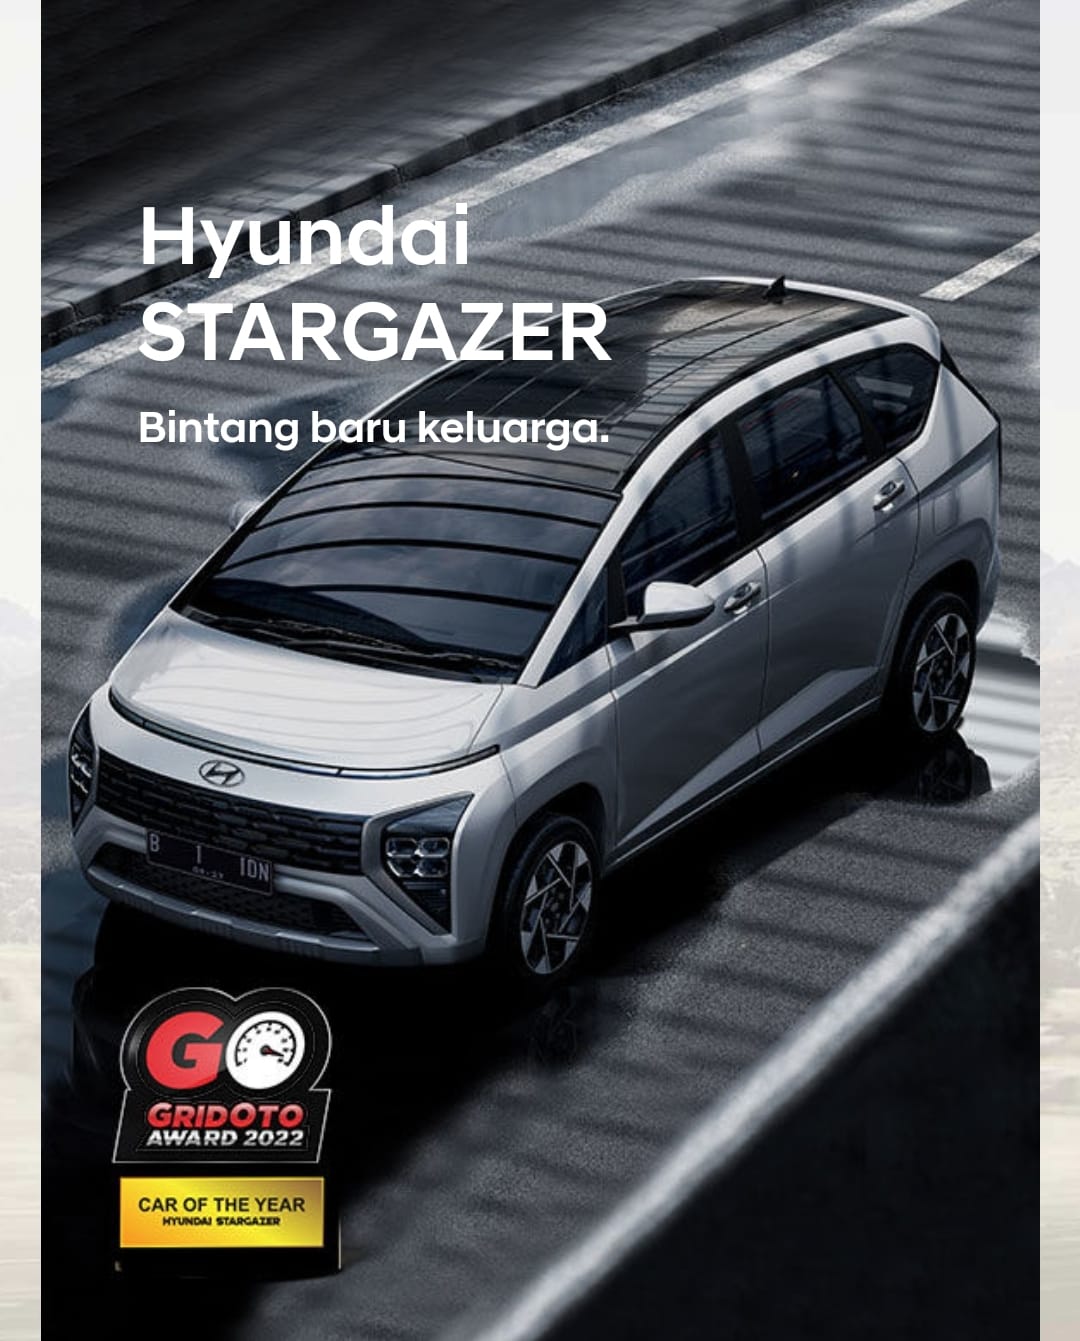 Harga Hyundai Stargazer Bali, Promo Hyundai Stargazer Bali